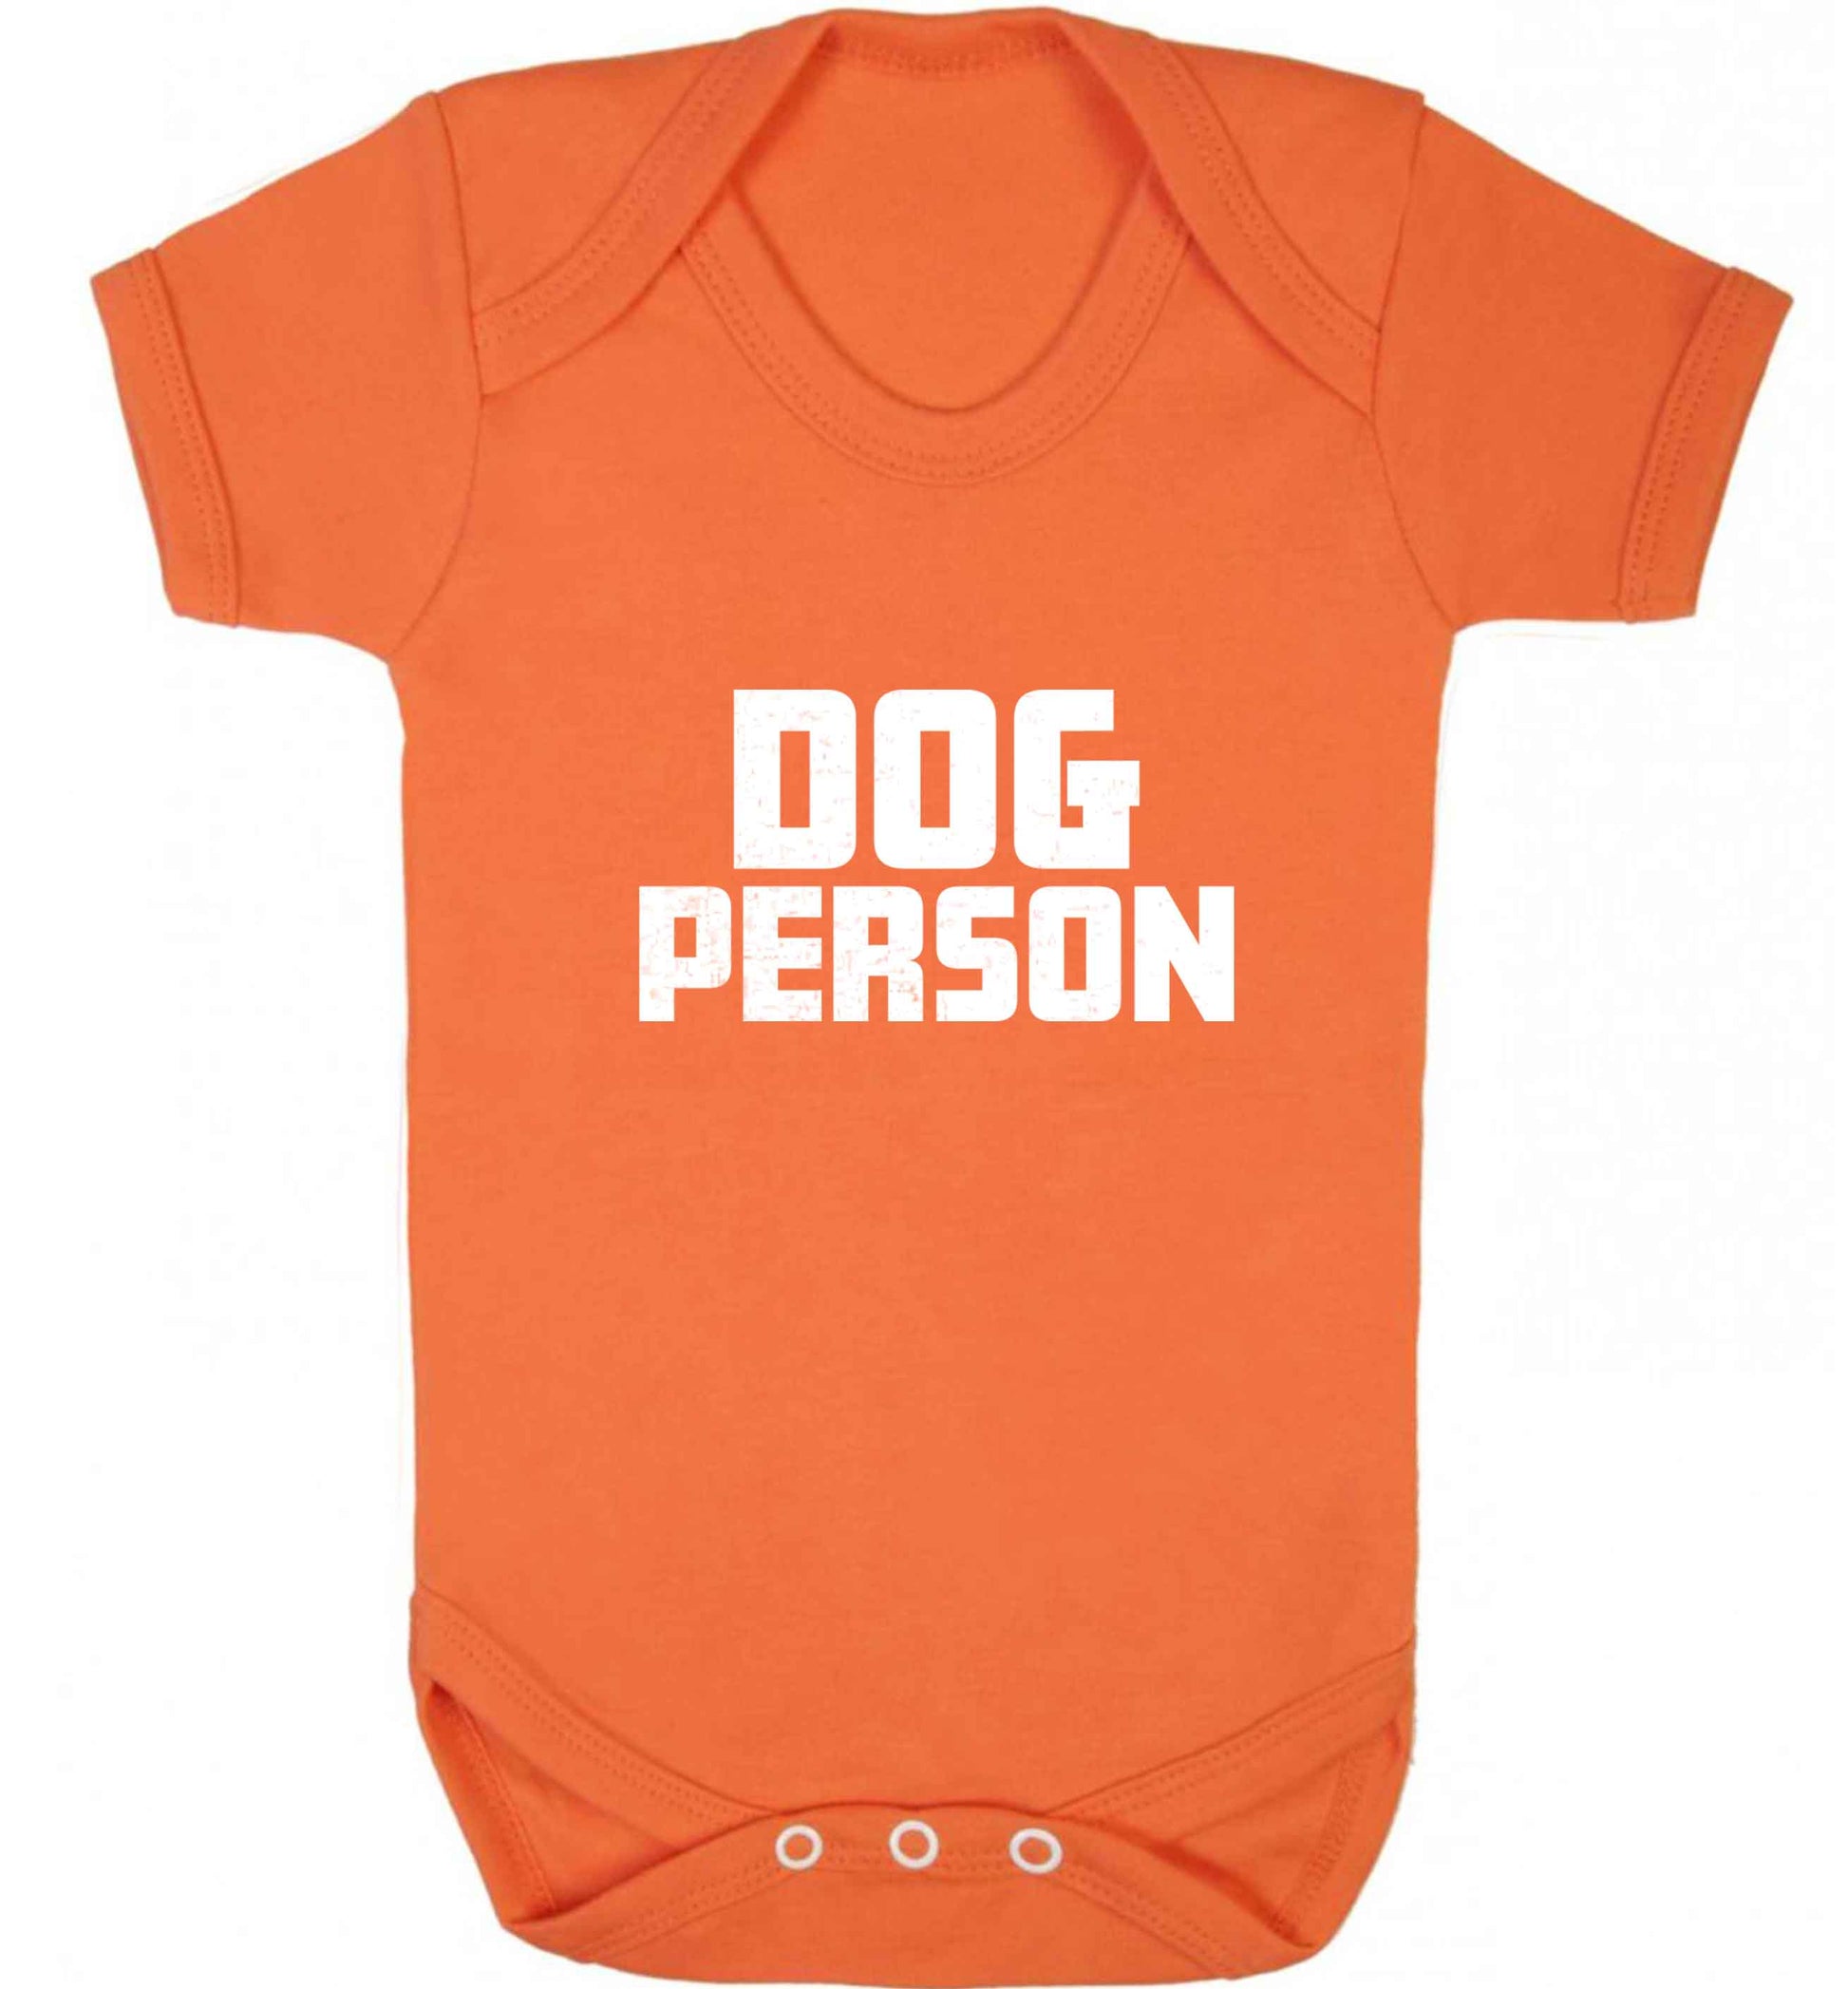 Dog Person Kit baby vest orange 18-24 months